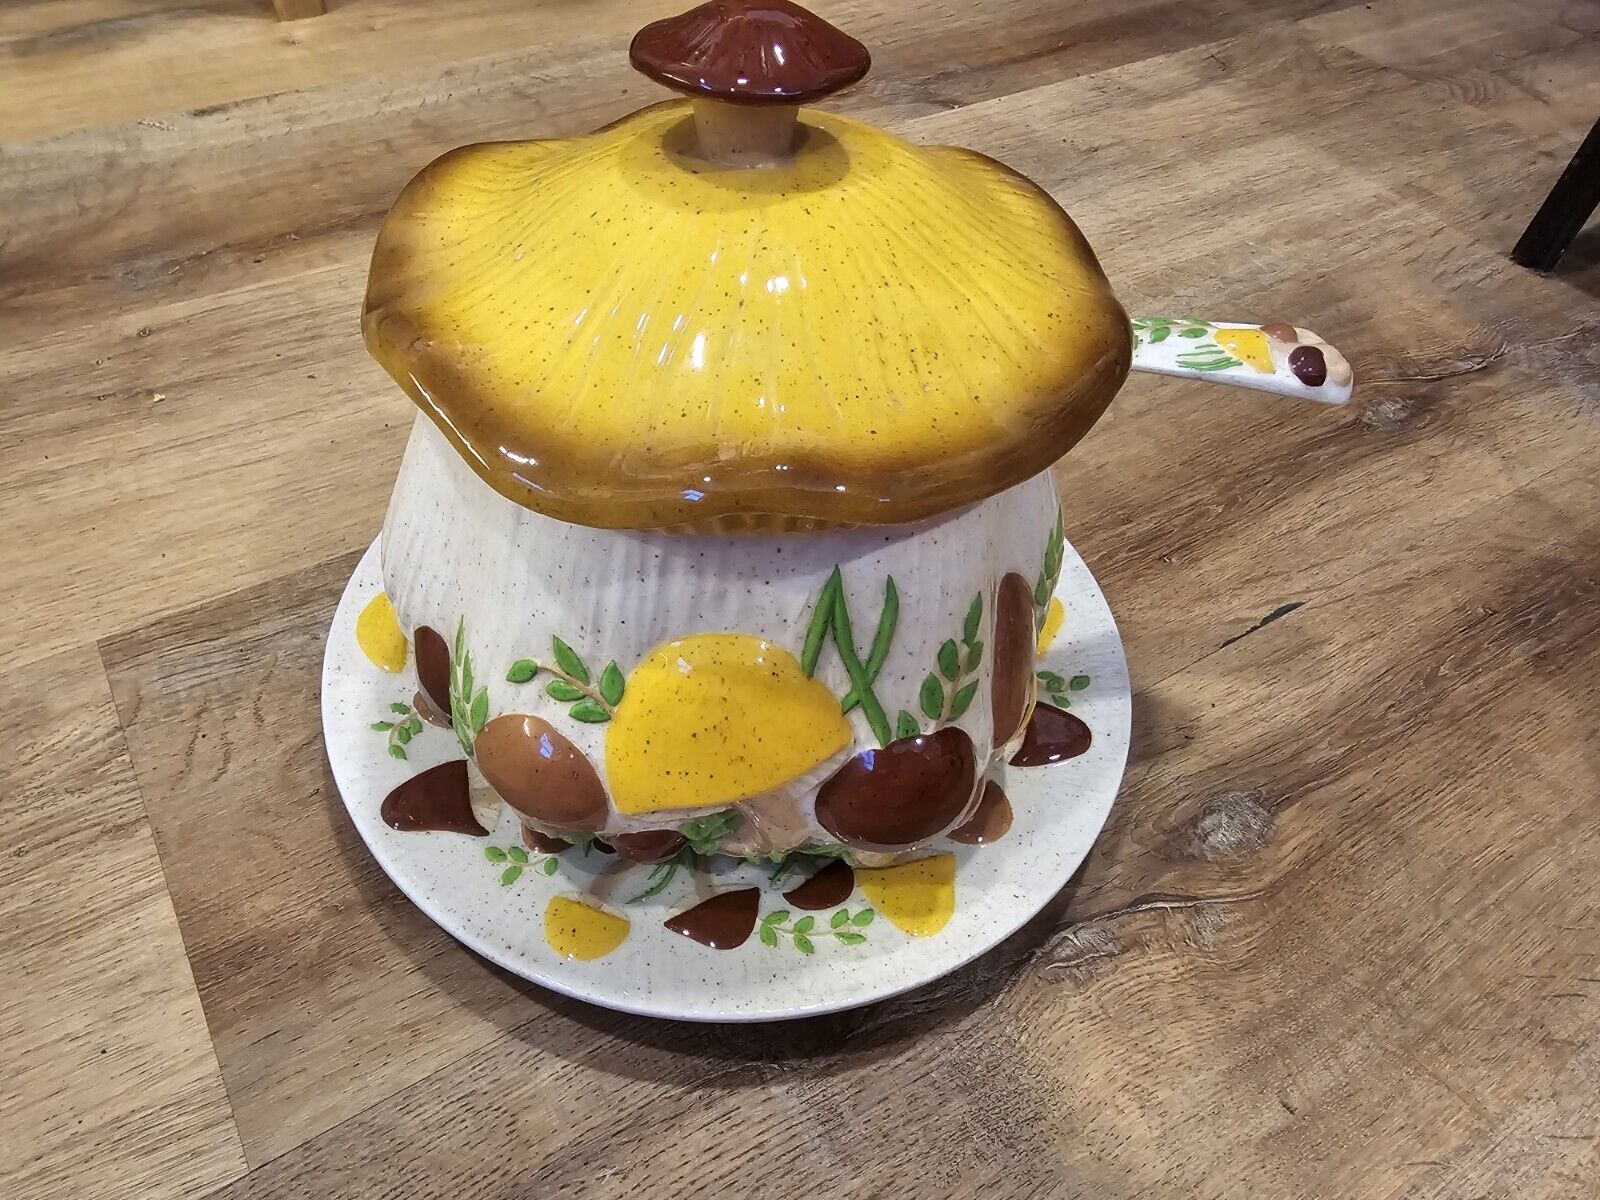 Vintage Ceramic Arnel’s Mushroom Soup Tureen with Lid, Ladle And Plate 4 Piece